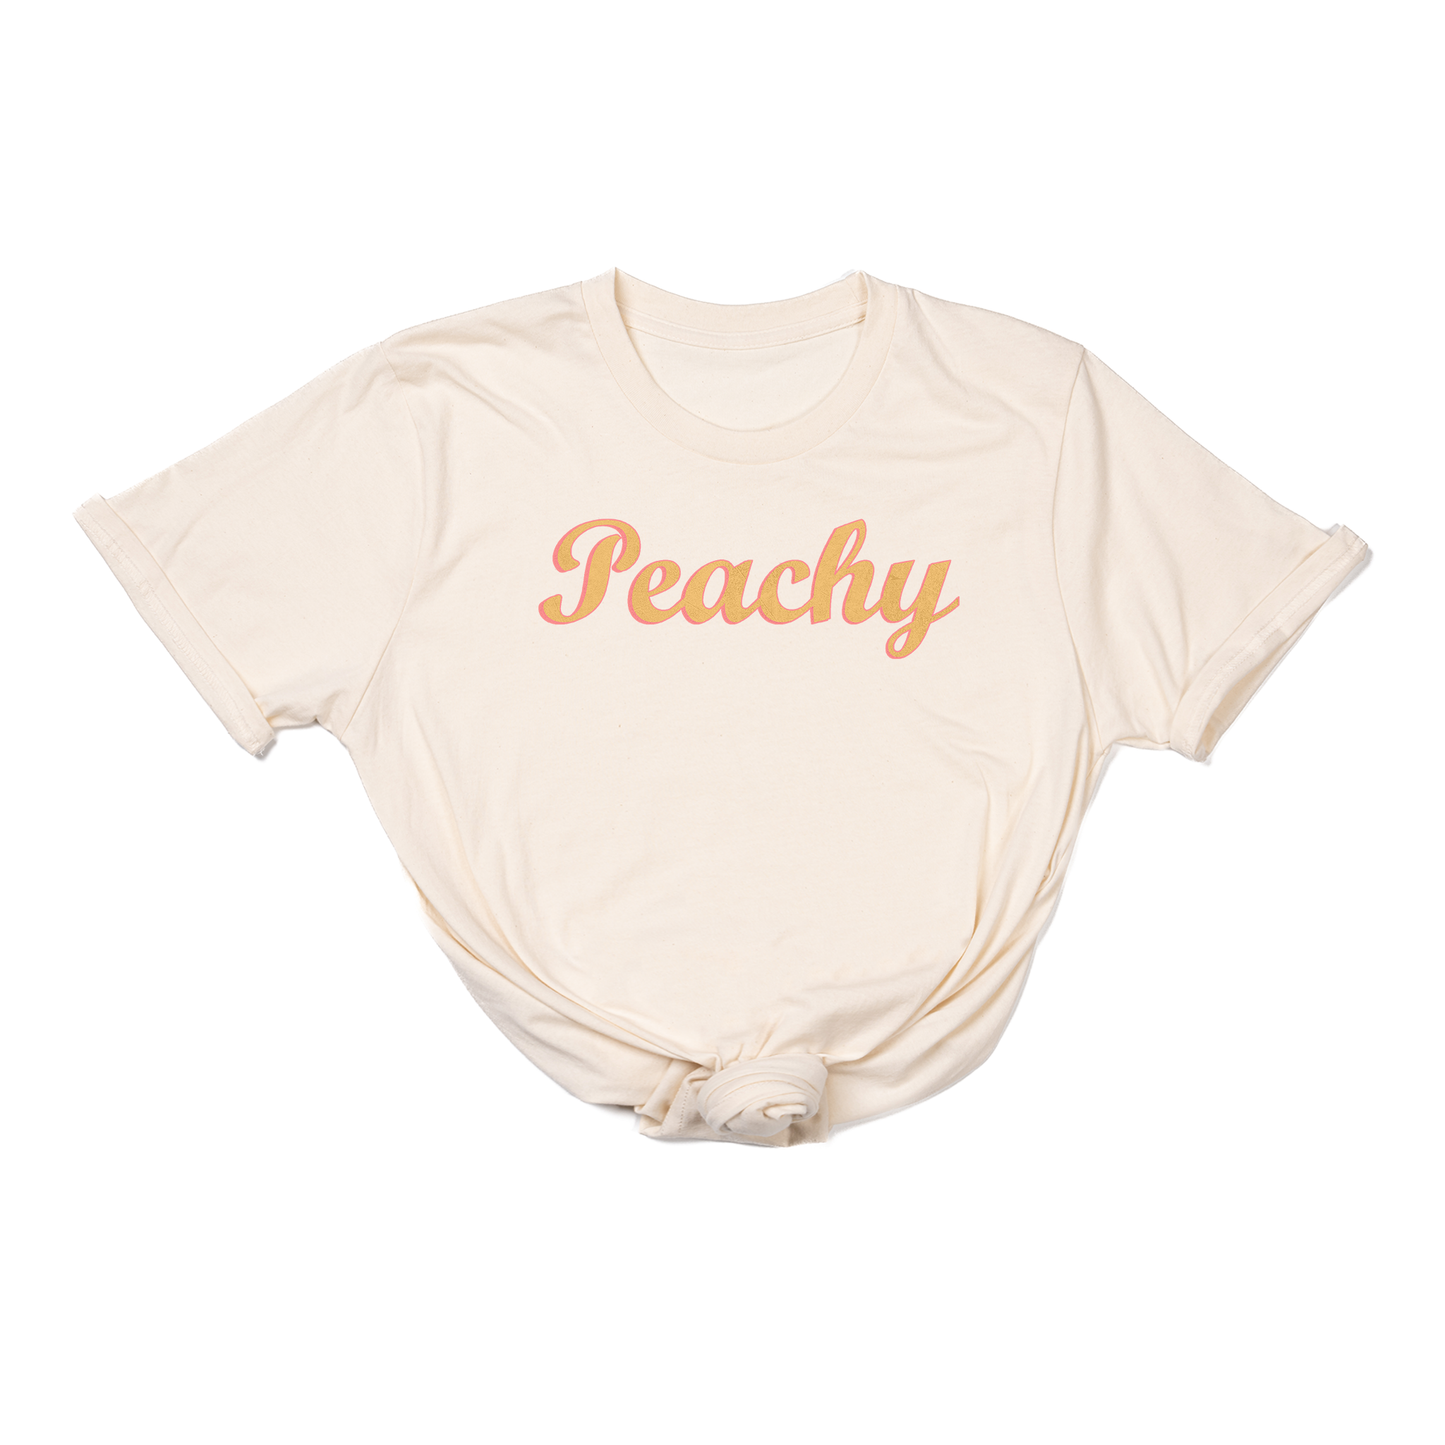 Peachy - Tee (Natural)